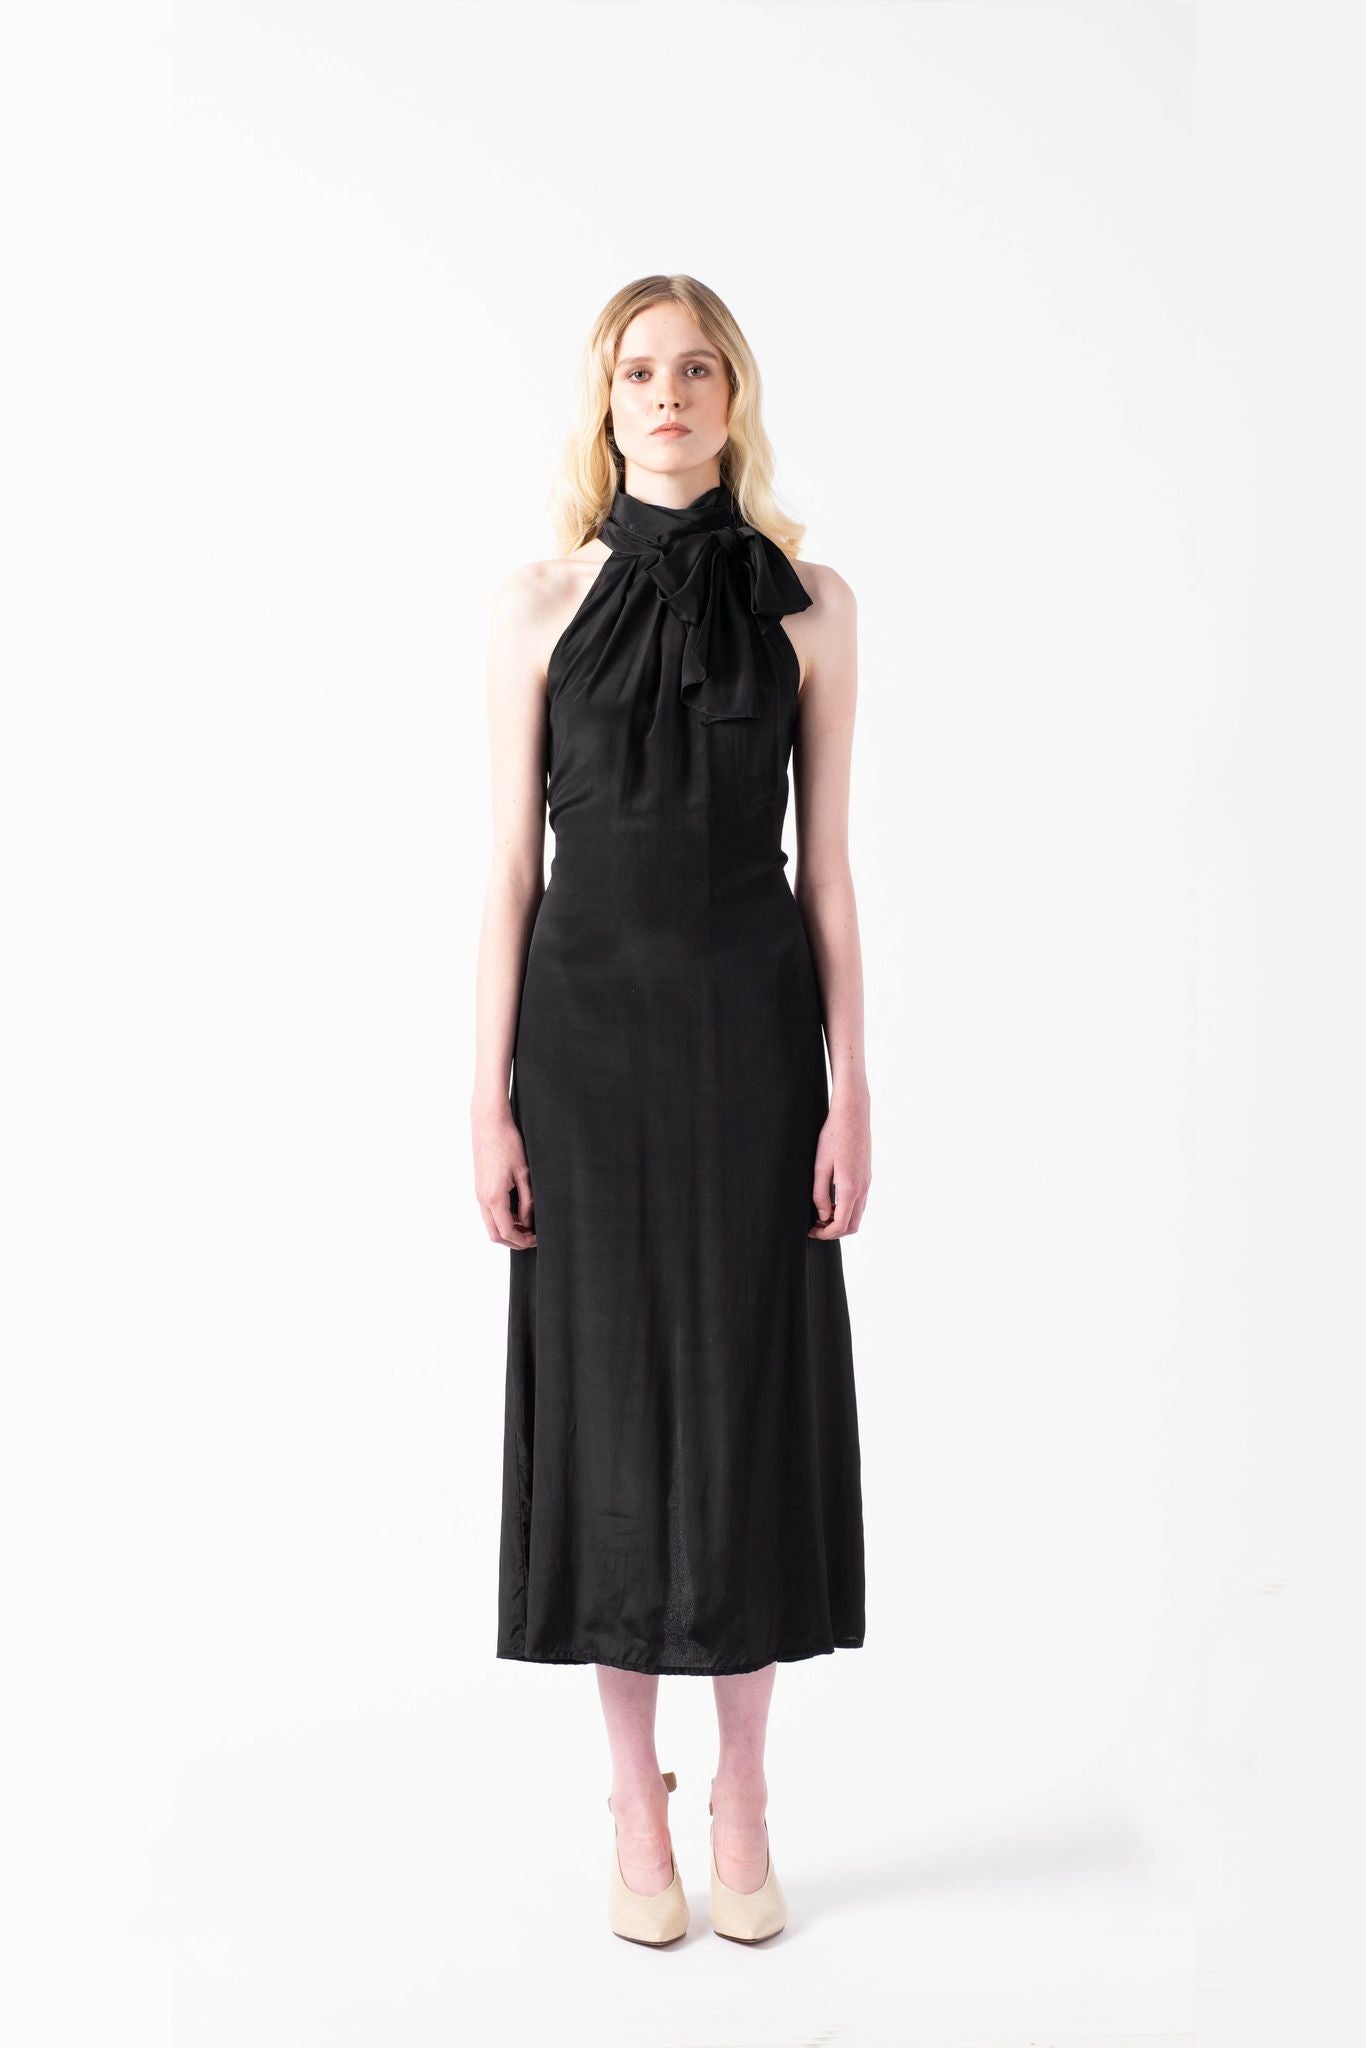 Bow Halter Dress (Black )